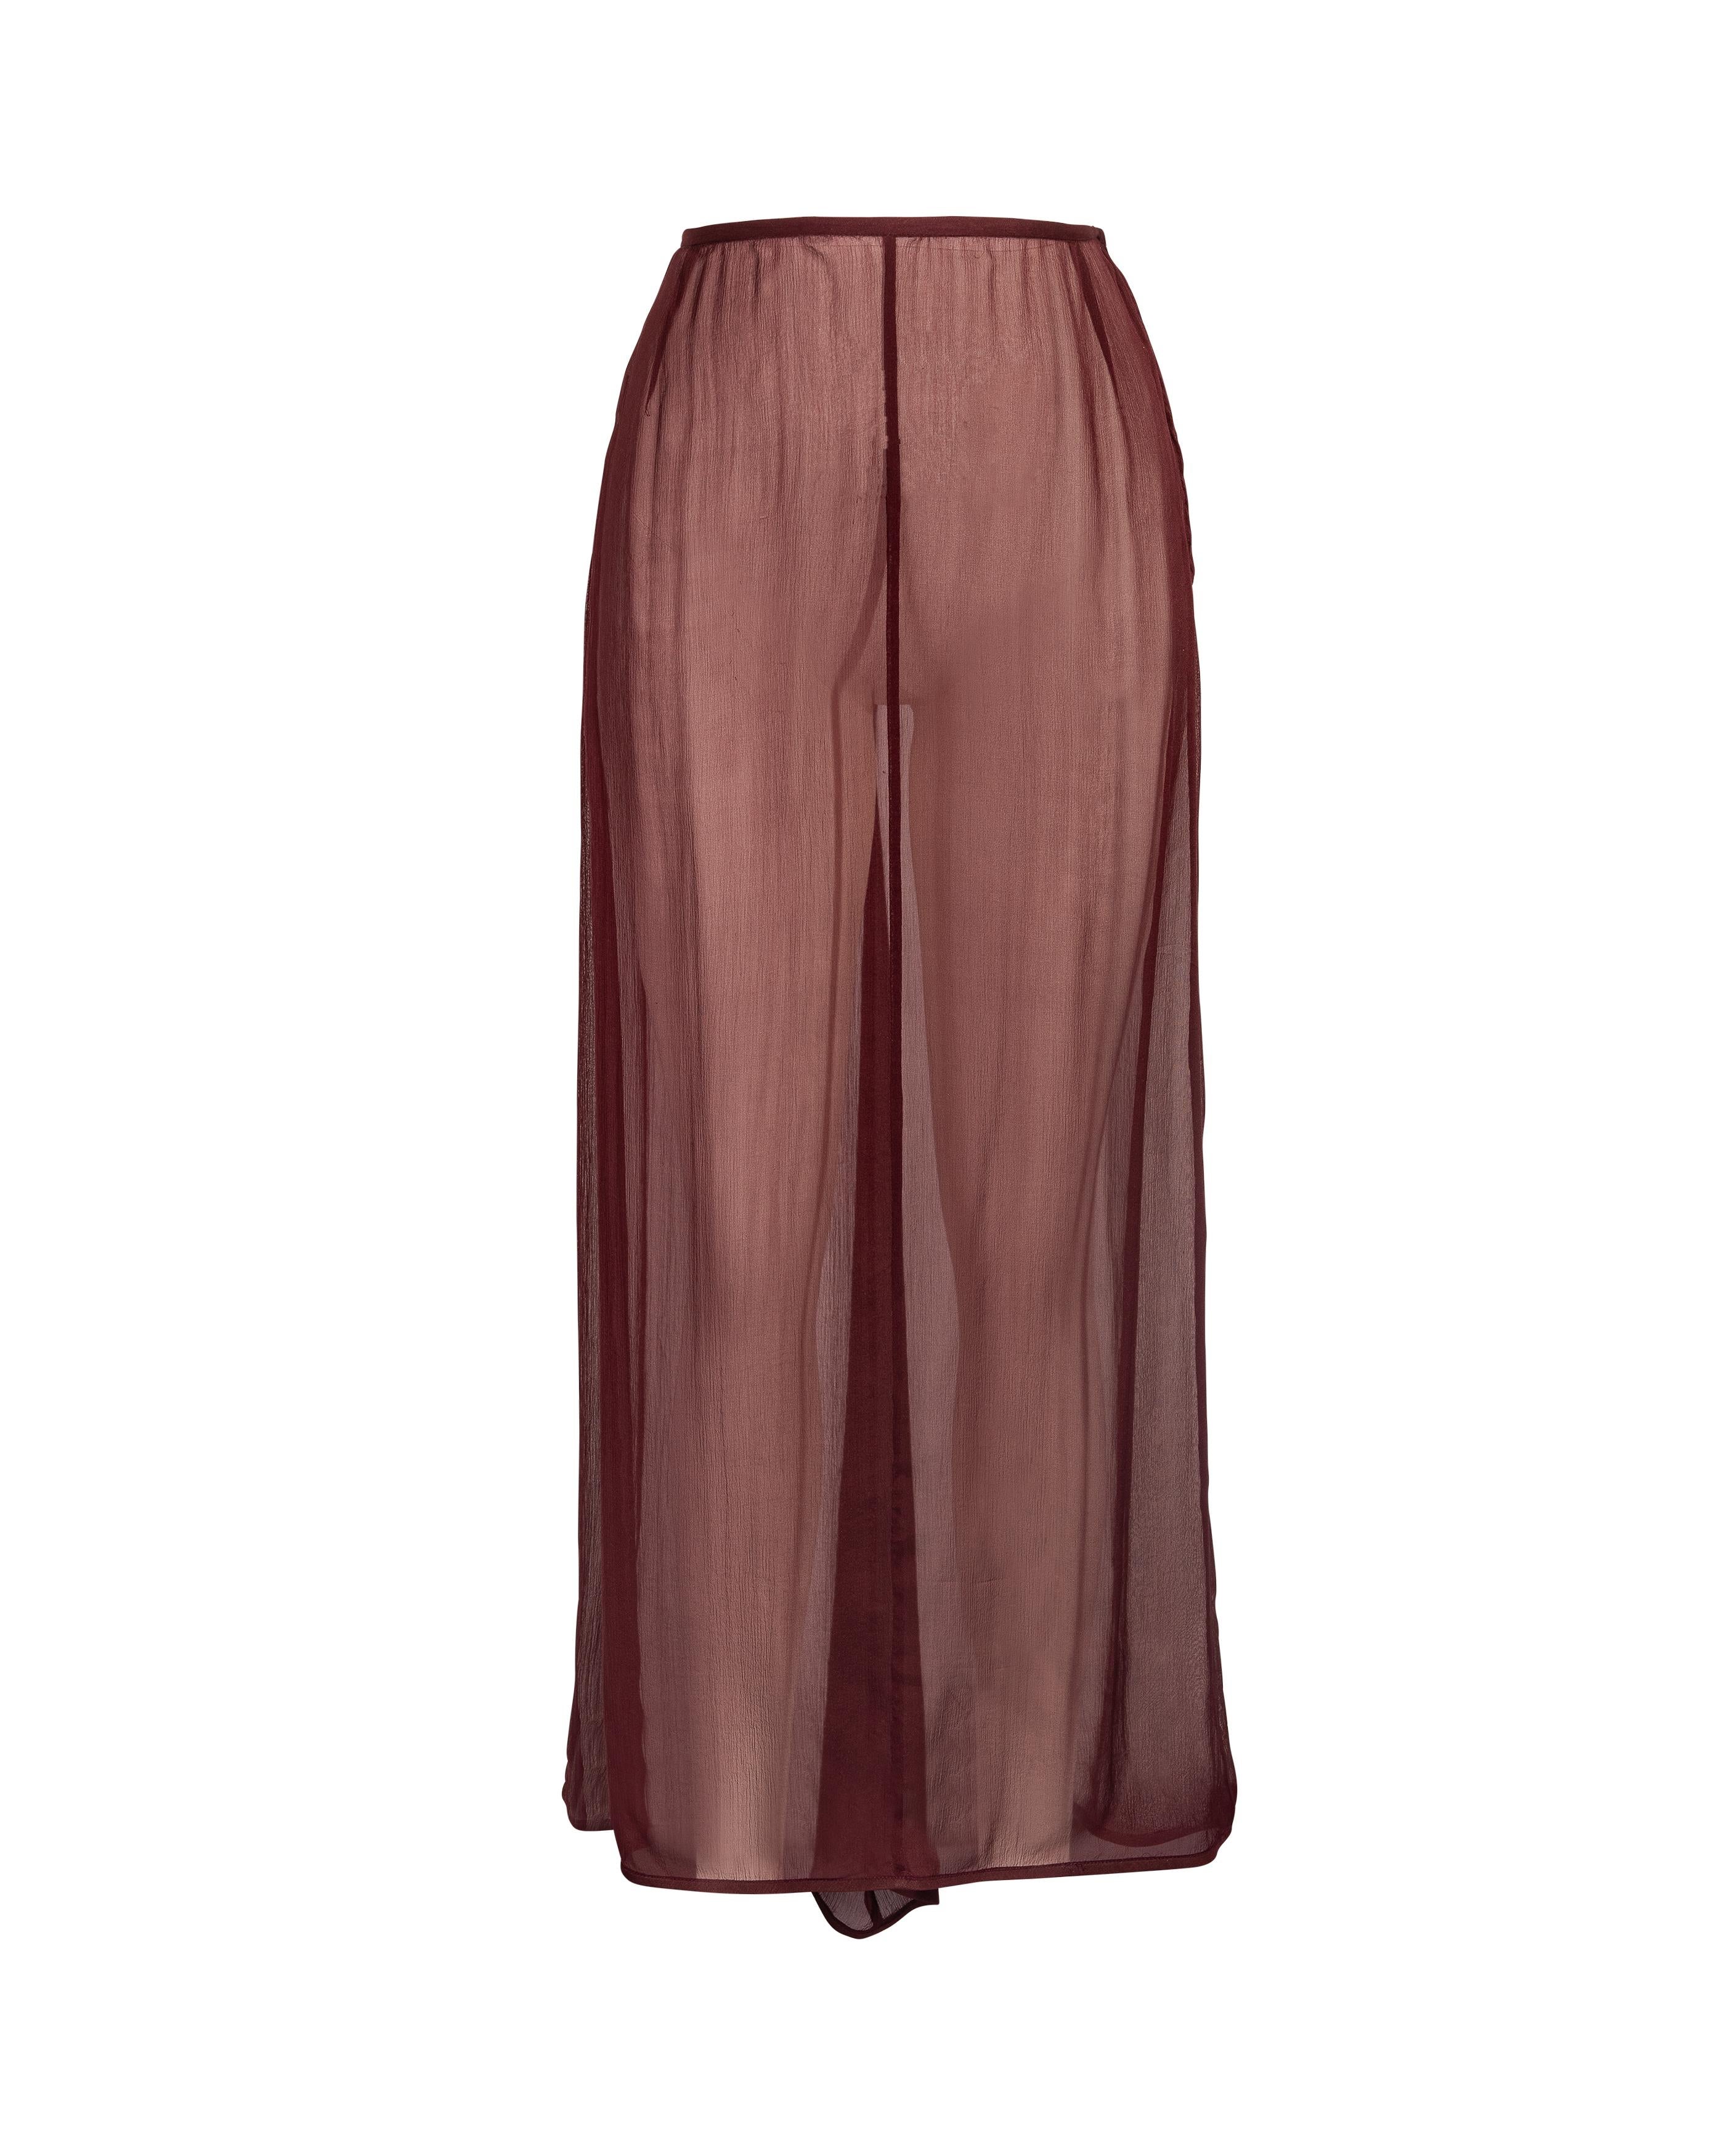 S/S 1997 Prada by Miuccia Prada Merlot Silk Chiffon Skirt Set 4